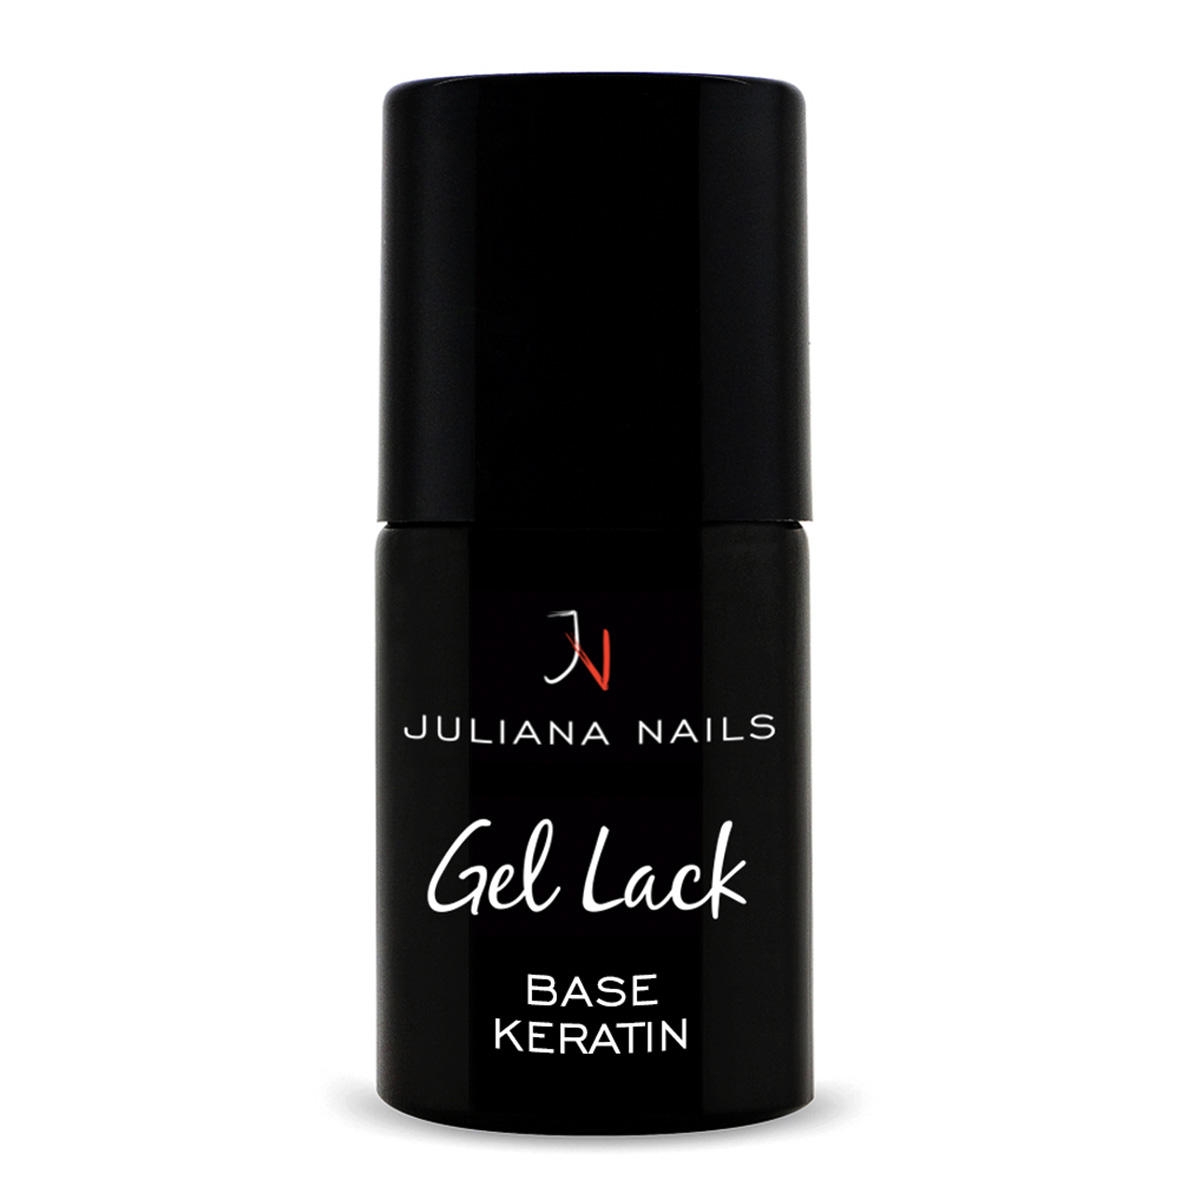 Juliana Nails Gel Lack Base  - 1